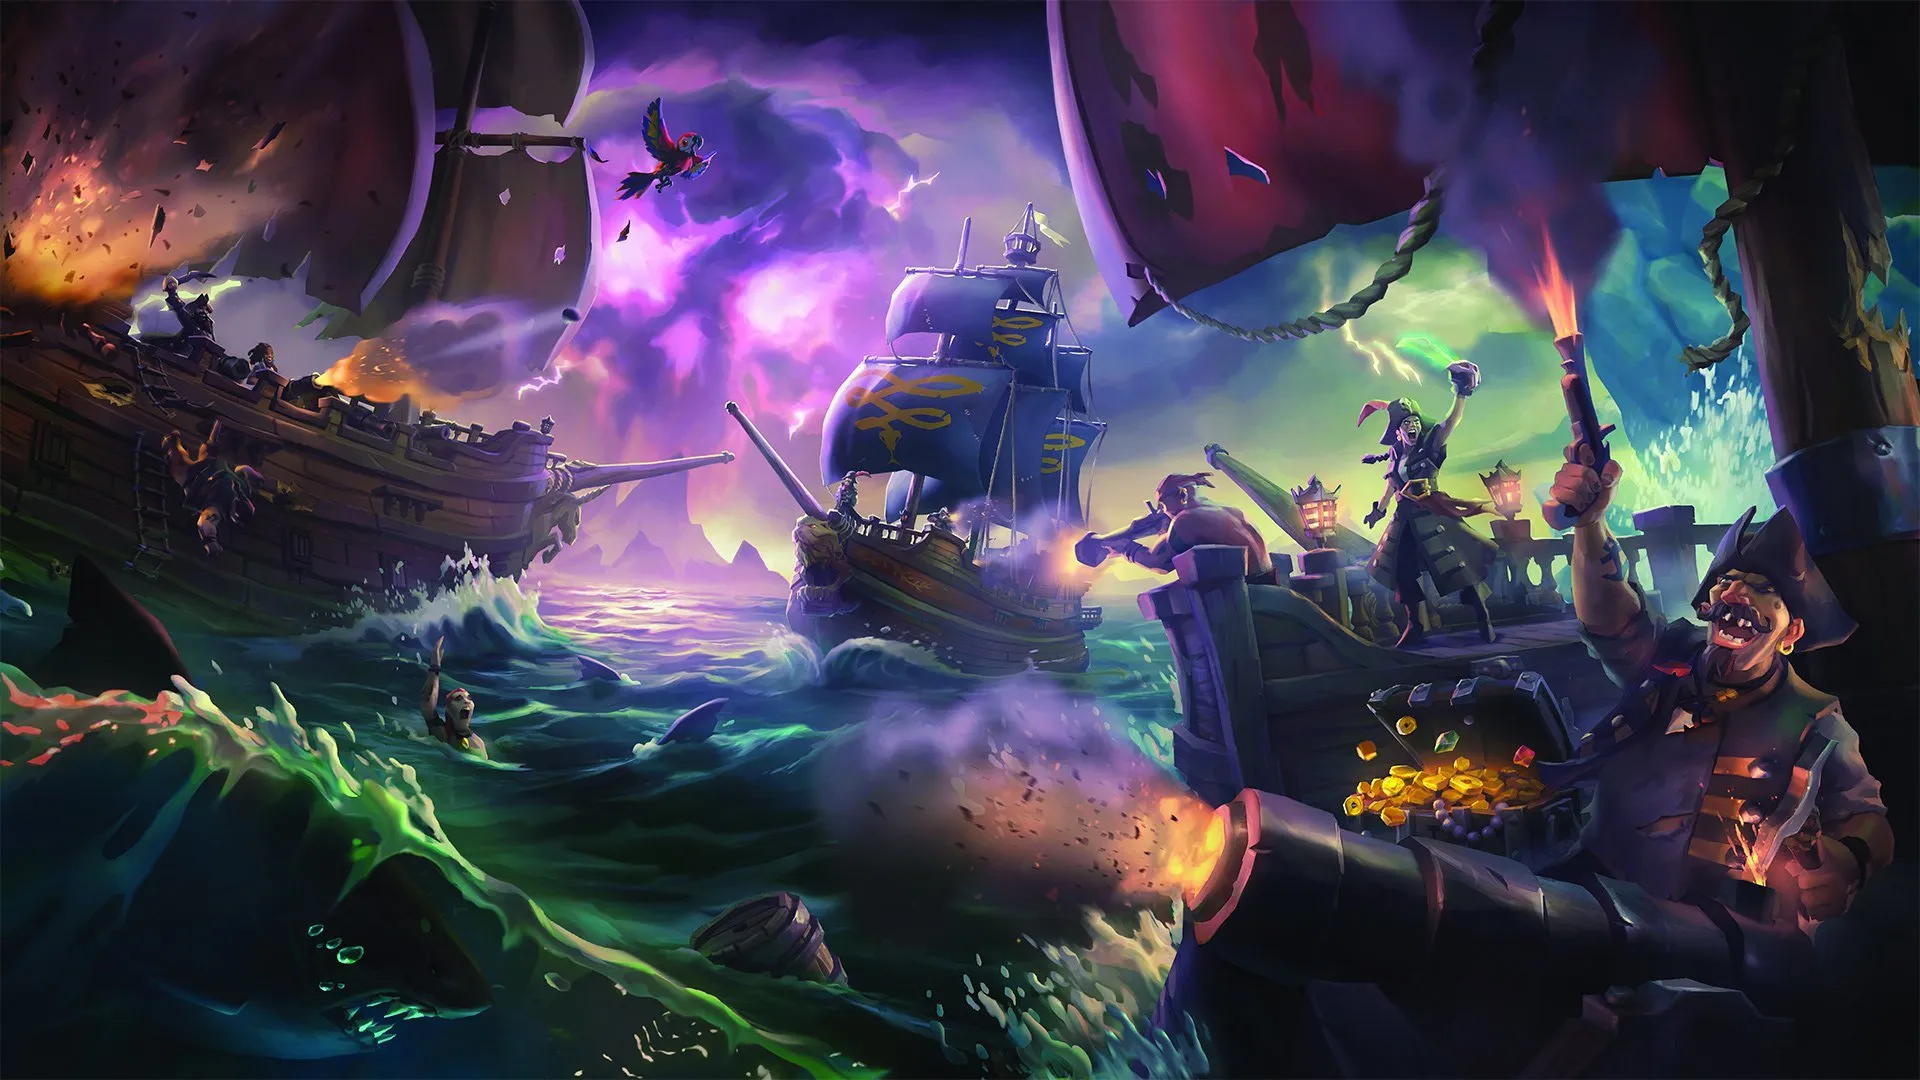 CS GO Toxic Purple Art Wallpaper, HD Games 4K Wallpapers, Images